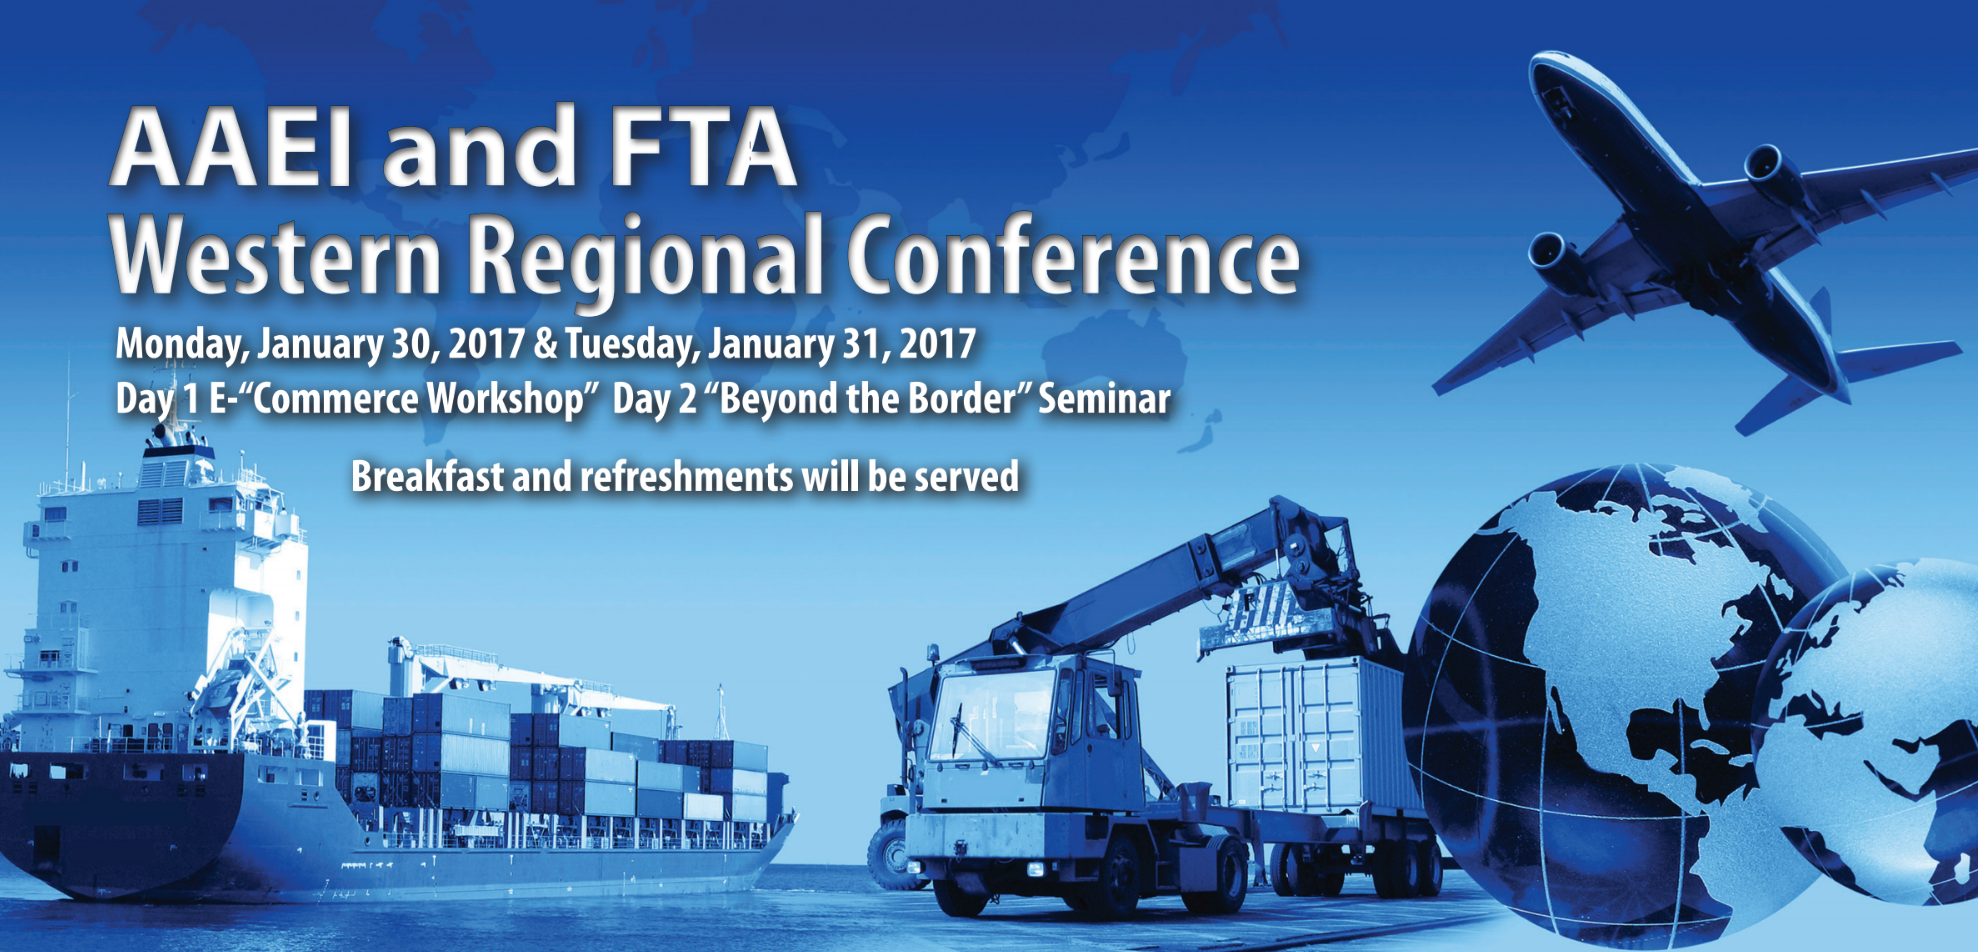 AAEI and FTA Western Regional Conference